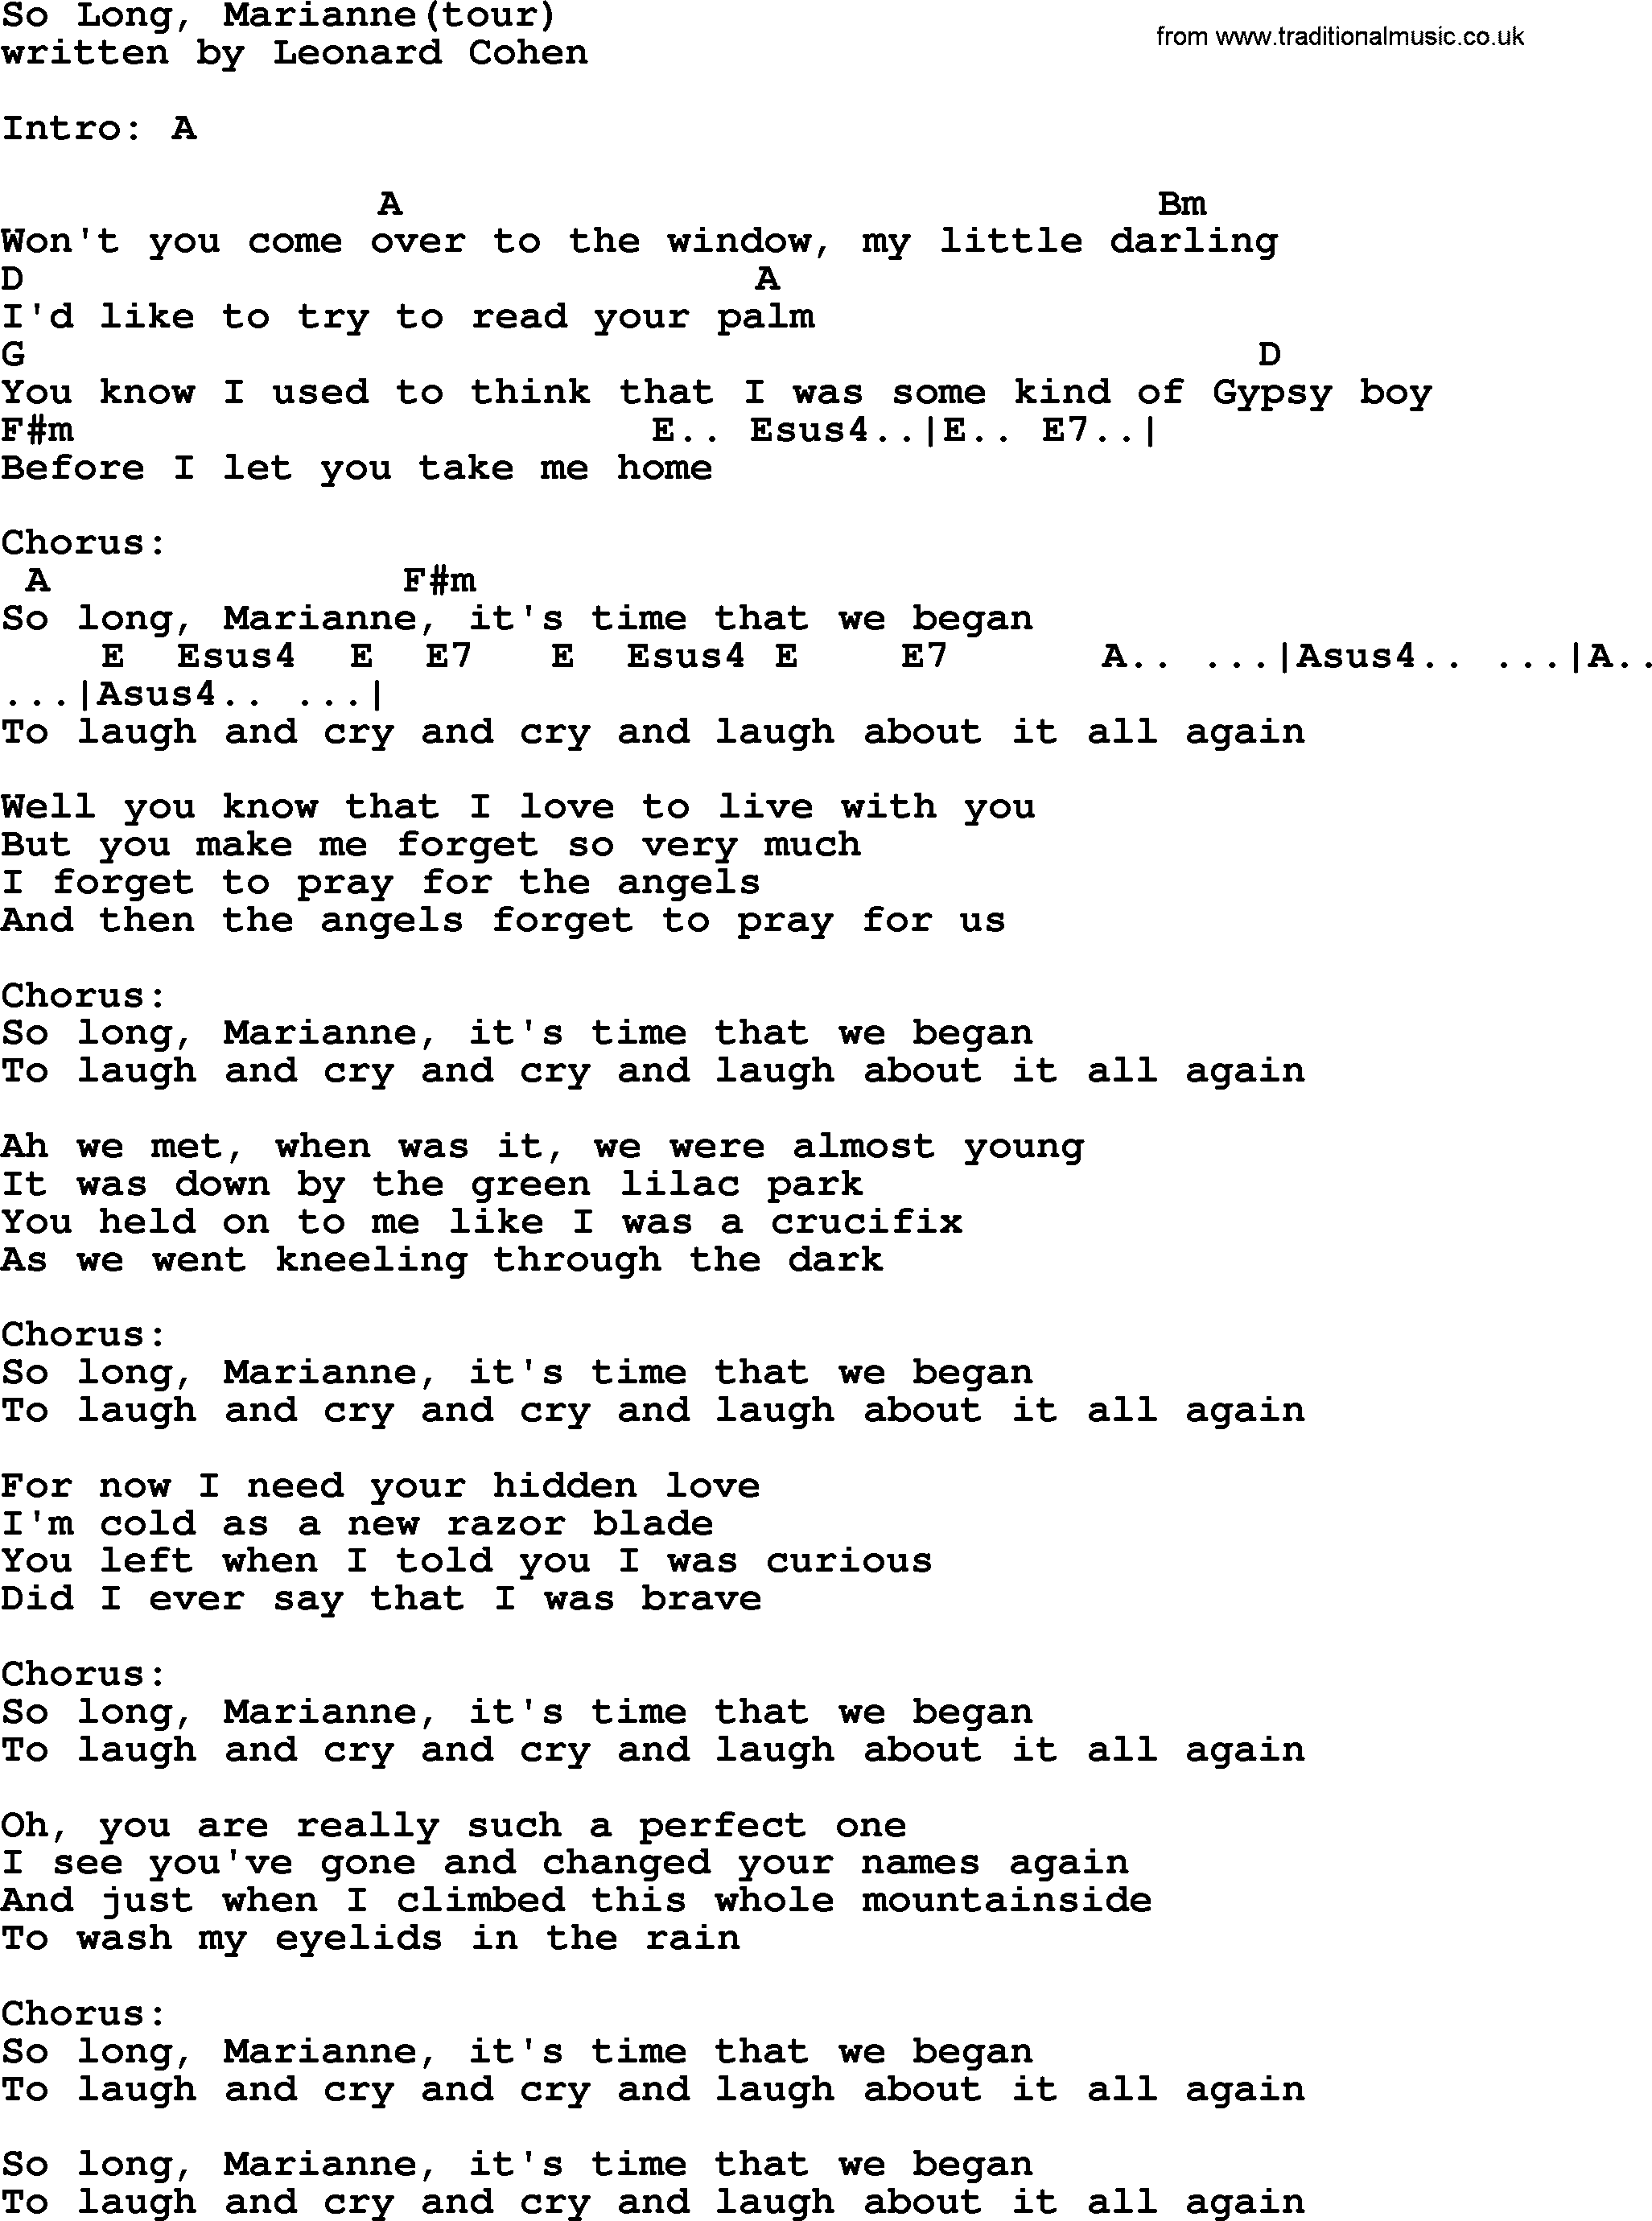 Leonard Cohen song So Long Marianne(tour), lyrics and chords